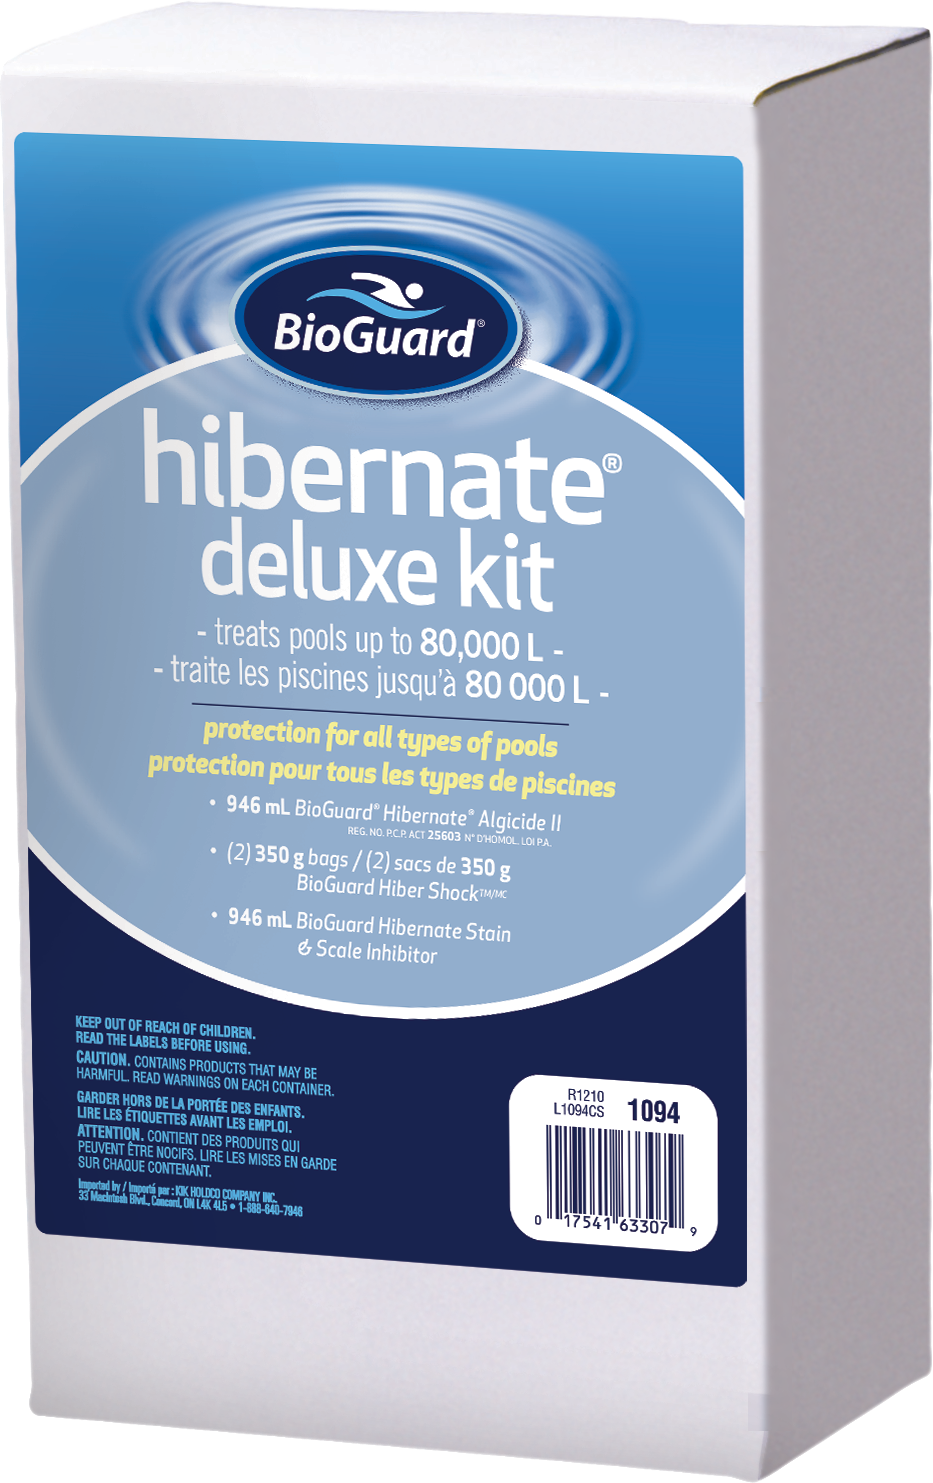 BioGuard Hibernate Closing Kit Deluxe 80000L - HIBERNATE POOL CLOSING KIT - SALT POOLS